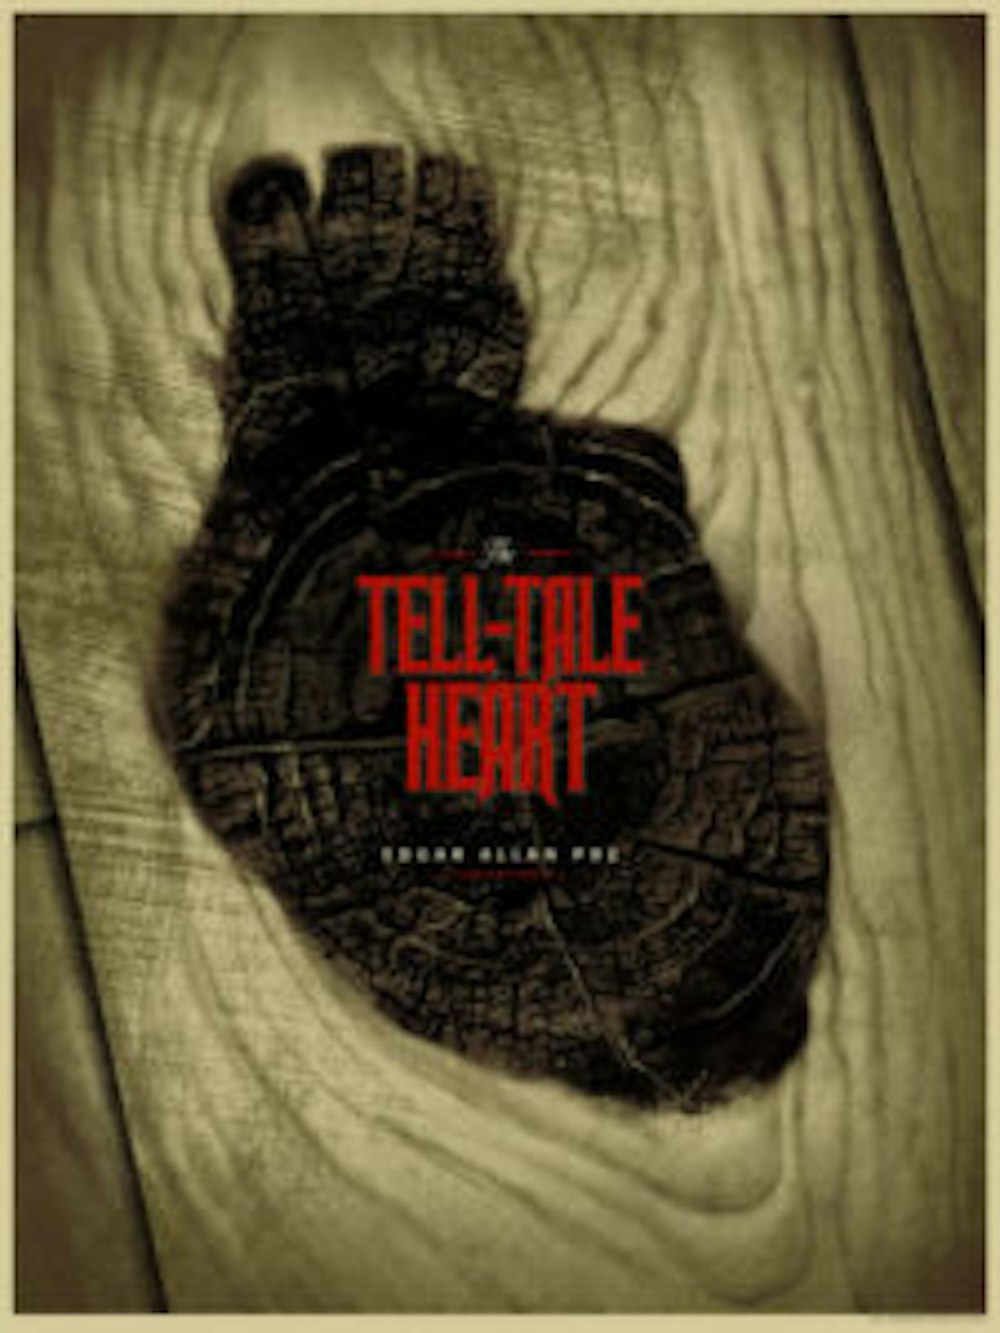 Edgar Allan Poe & The Tell-Tale Heart